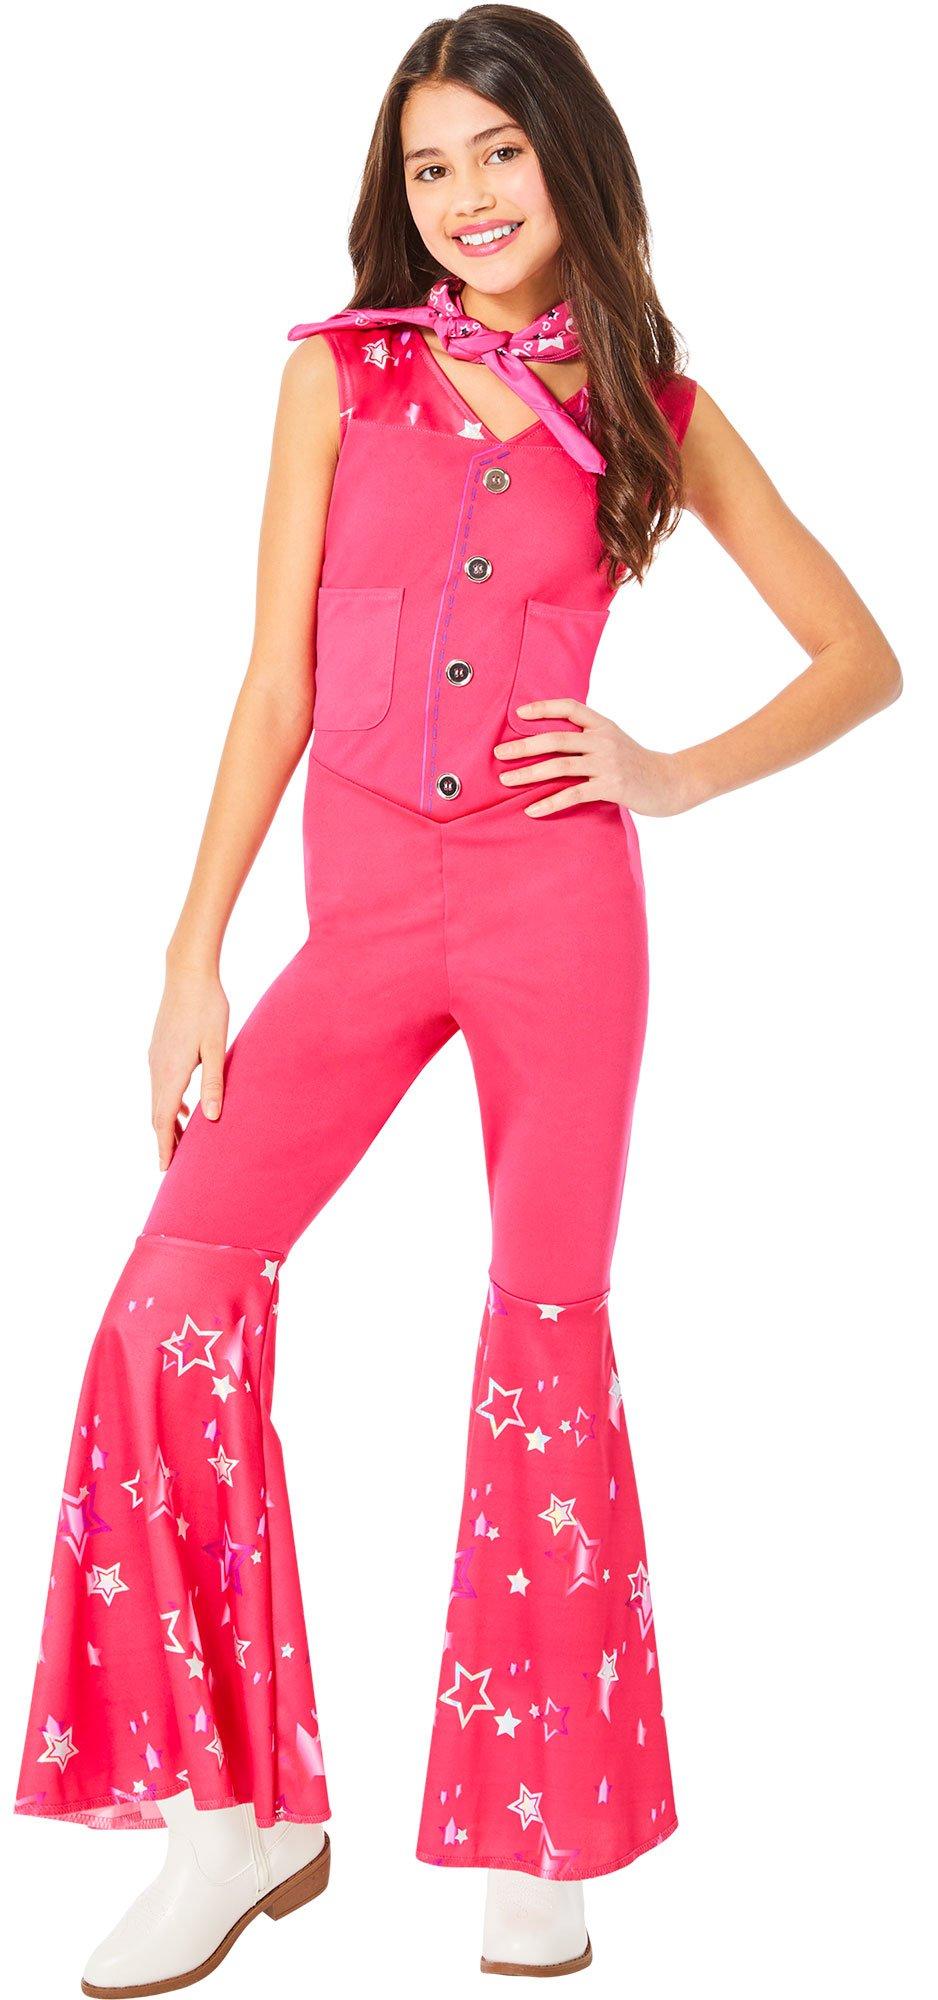 Kids' Barbie Cowgirl Costume